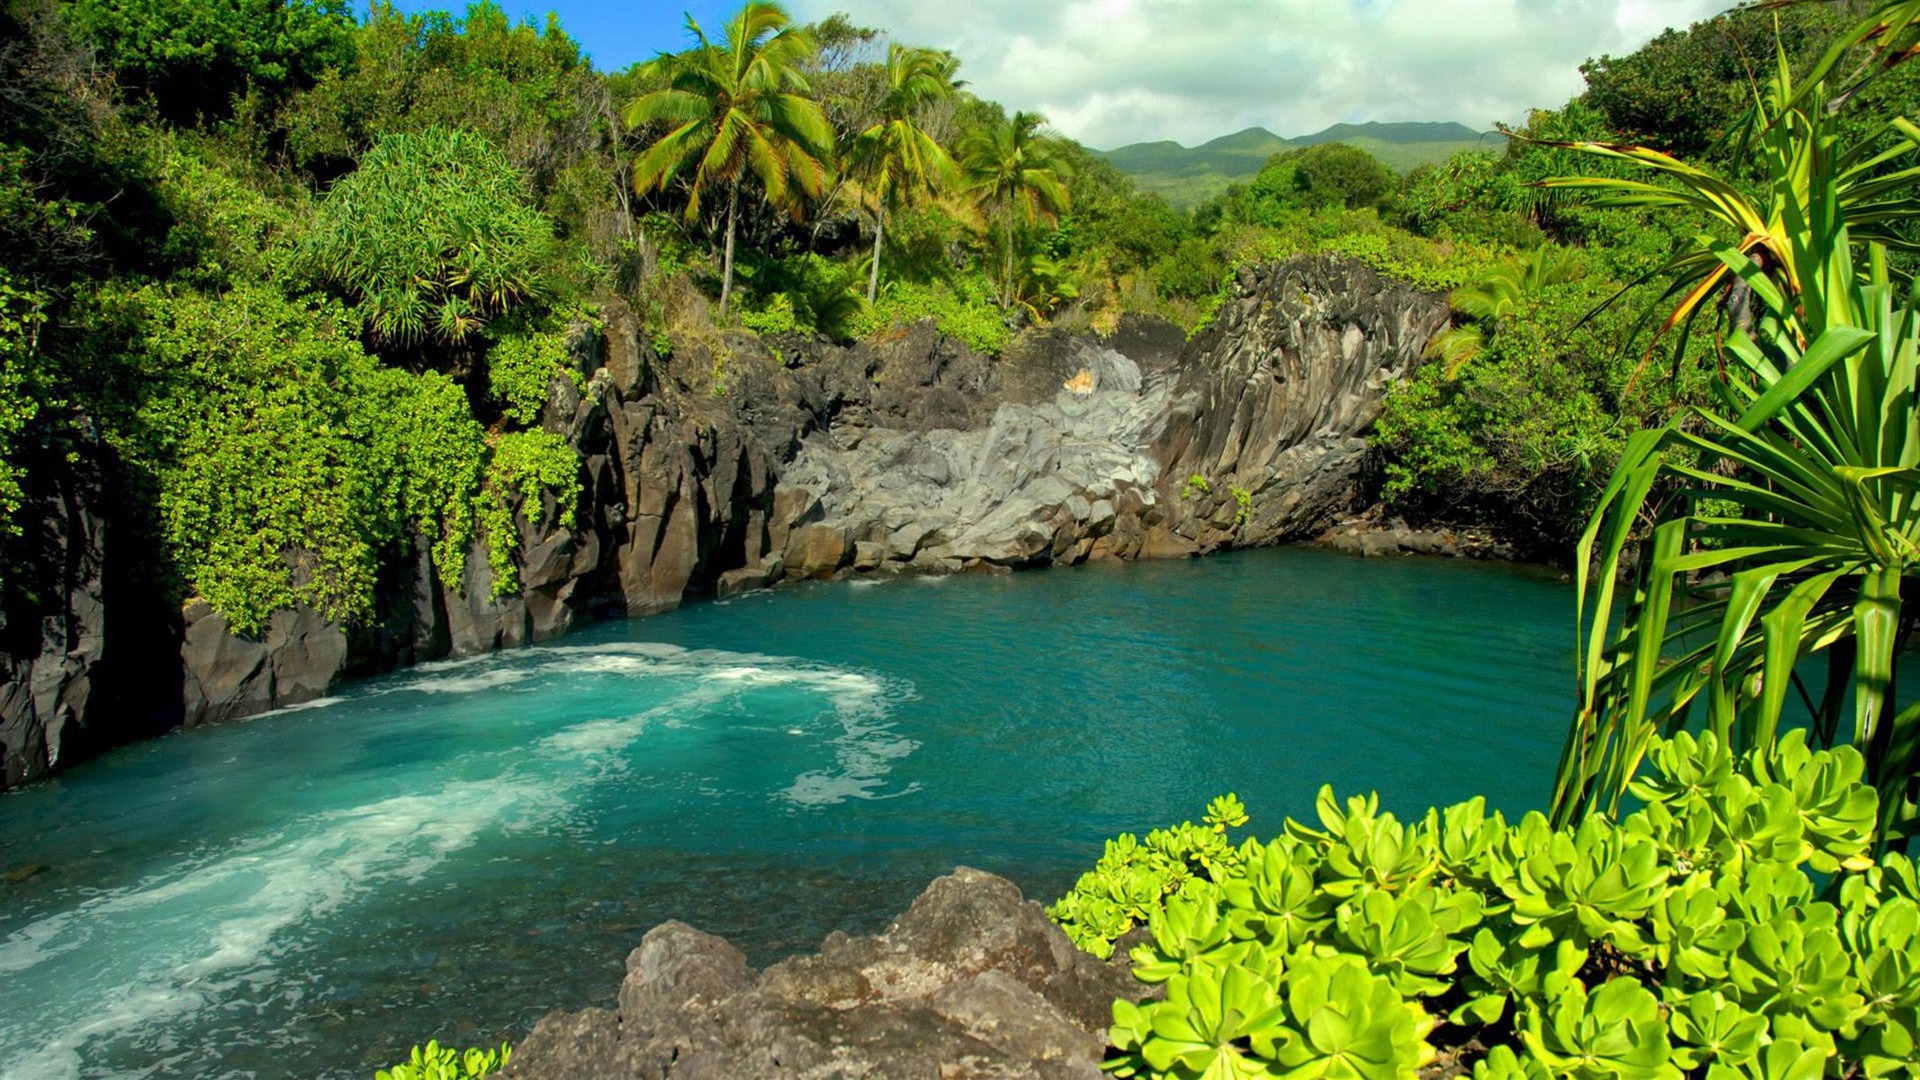 Maui Hawaii Natural Scenery Widescreen Wallpaper